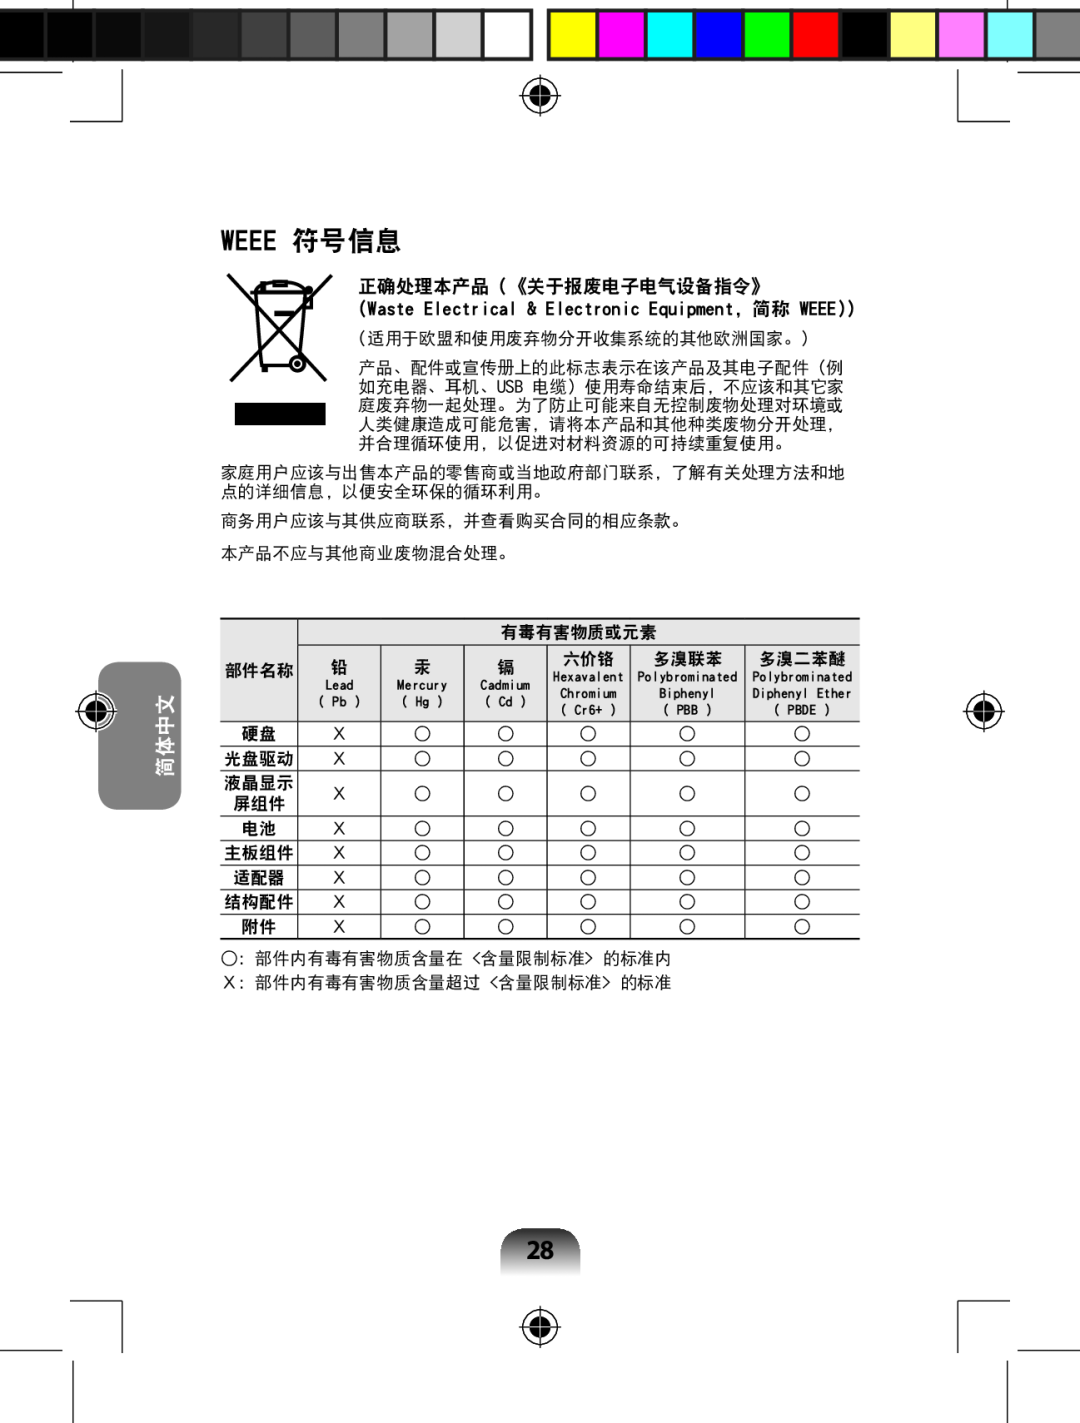 Samsung AARD7NSDOUS, AA-RD7NMKD/US manual Weee 符号信息, 简体中文, Waste Electrical & Electronic Equipment，简称 WEEE 